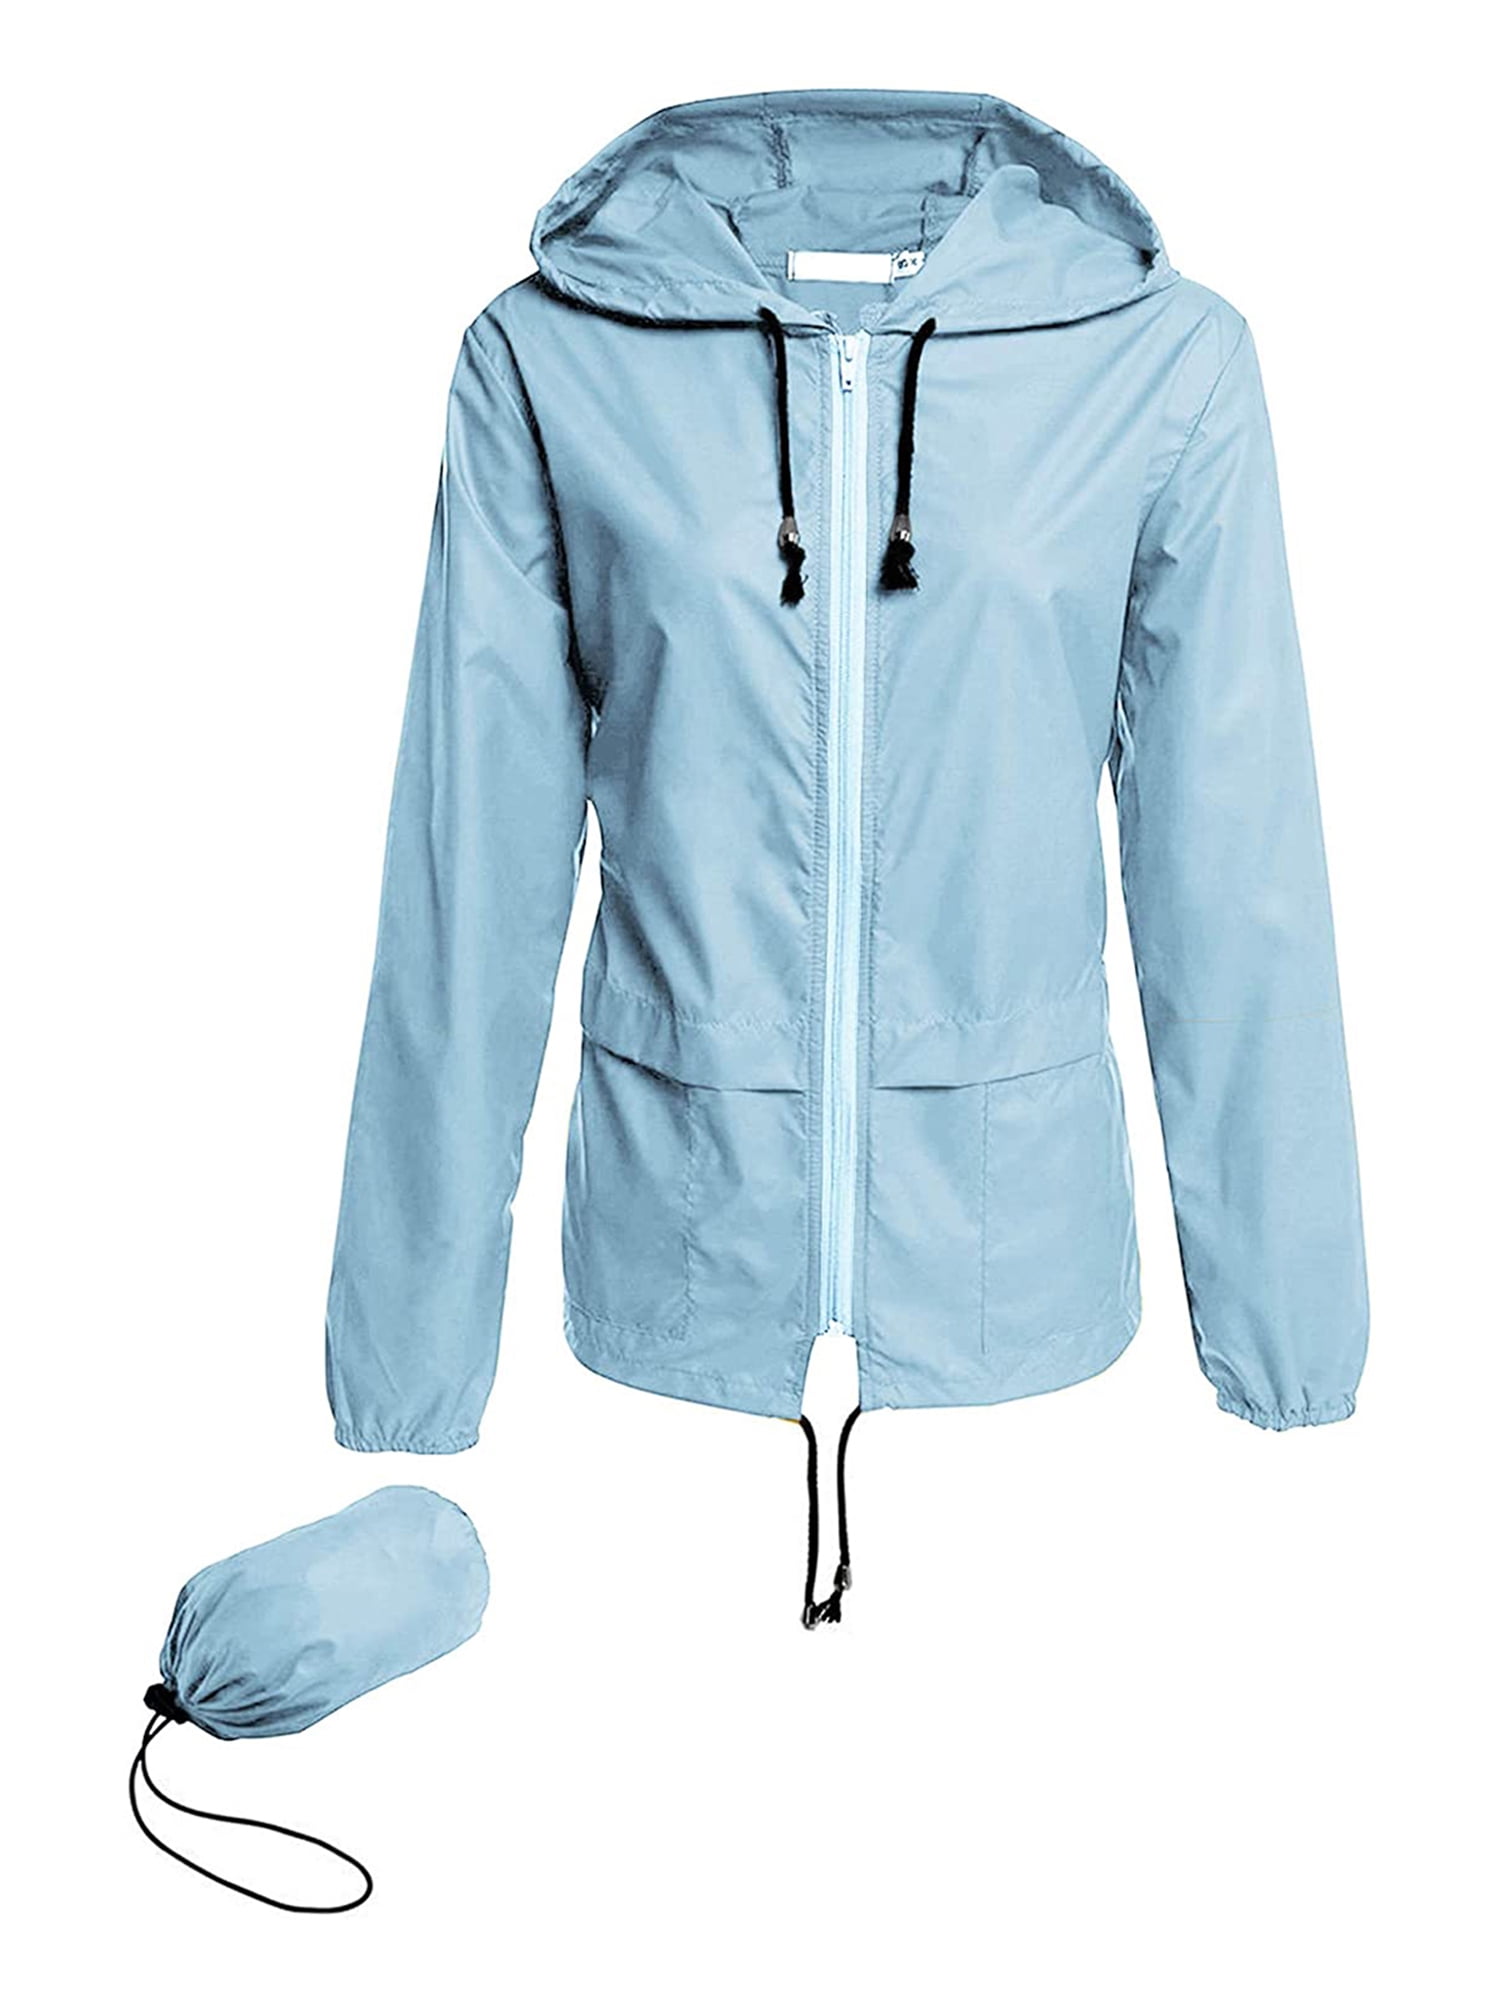 Women's Rain Jackets Hooded Windbreaker Packable Outerwear Spring  Lightweight Adjustable Drawstring Waterproof Raincoats Outdoor